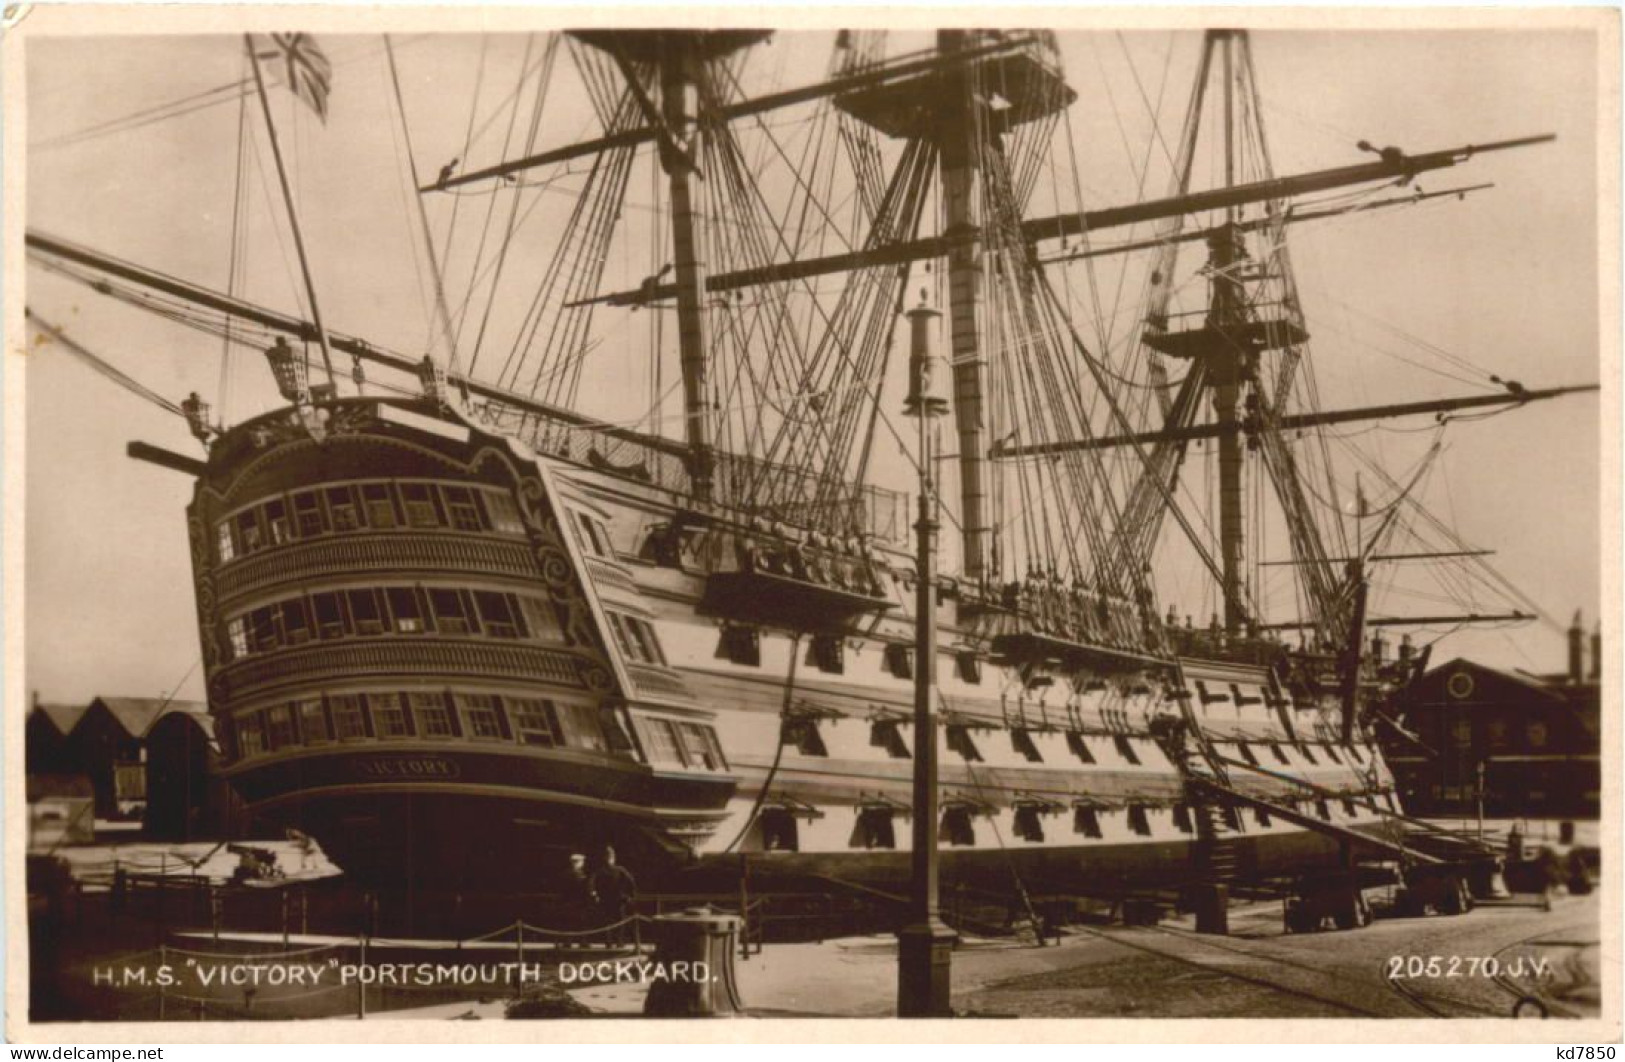 HMS Victory - Portsmouth Dockyard - Portsmouth